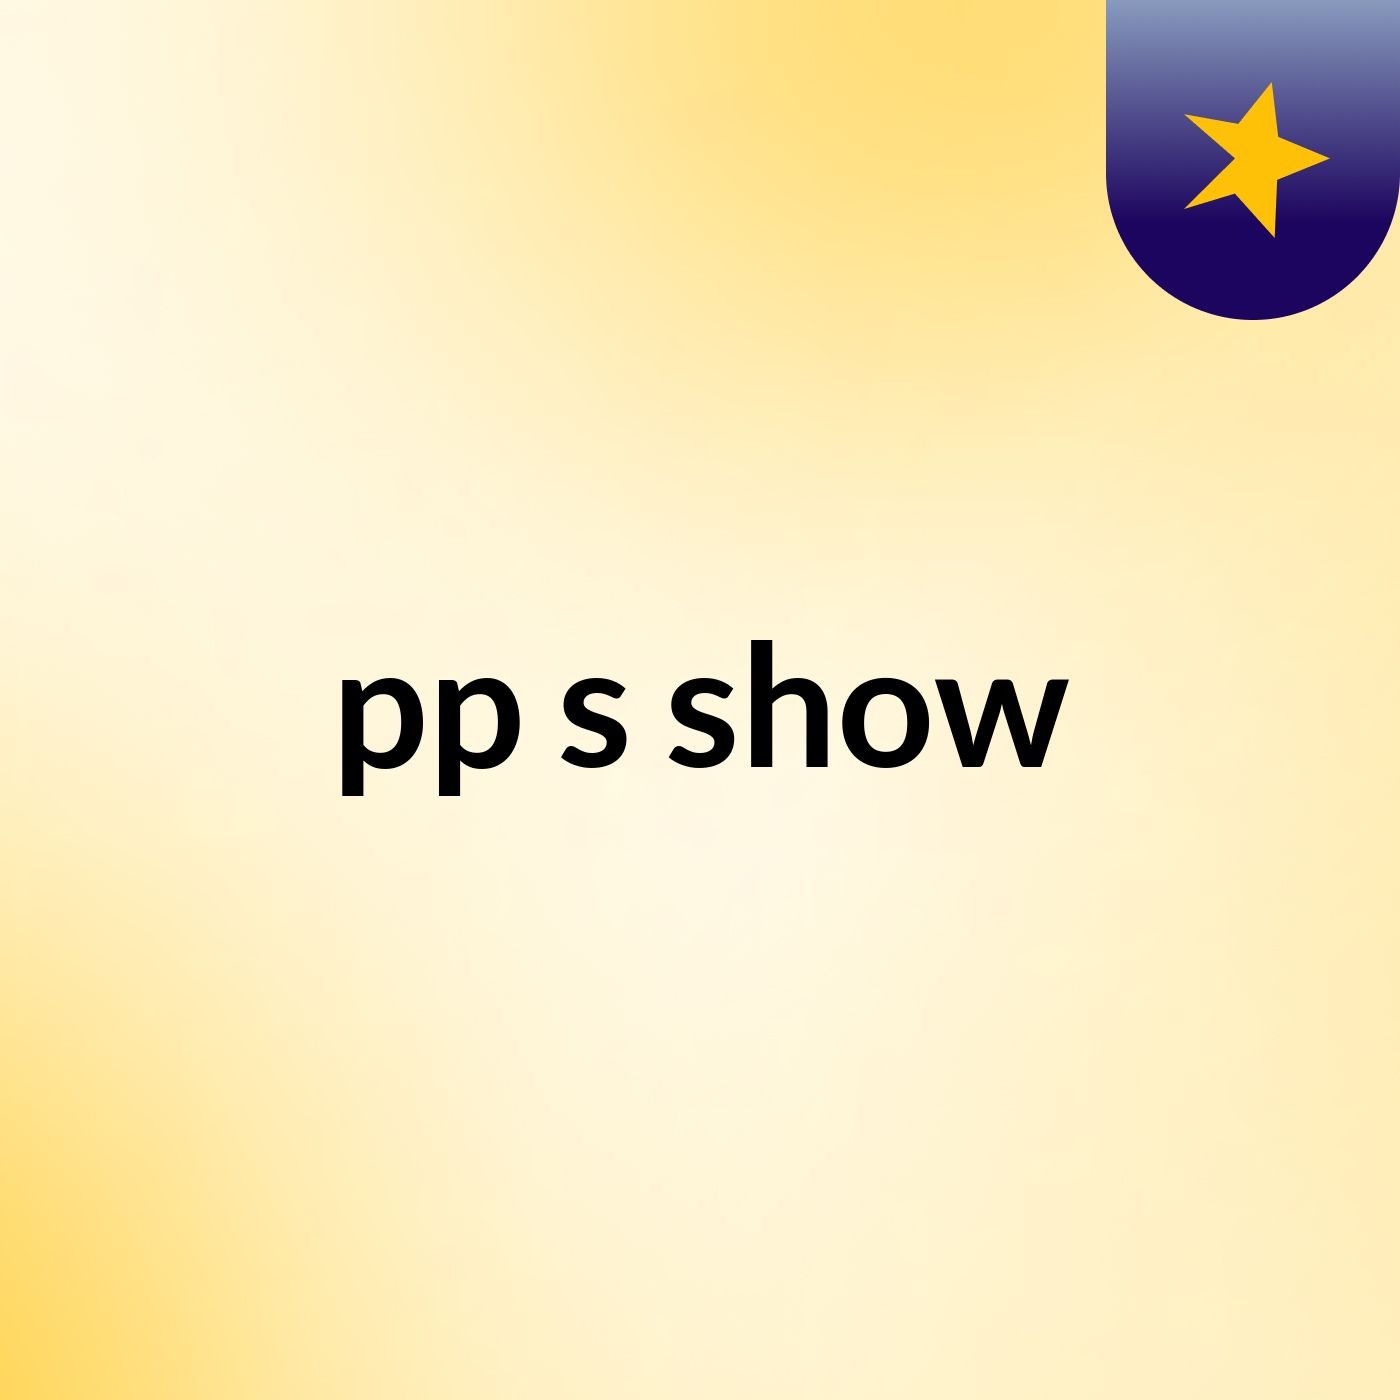 pp's show